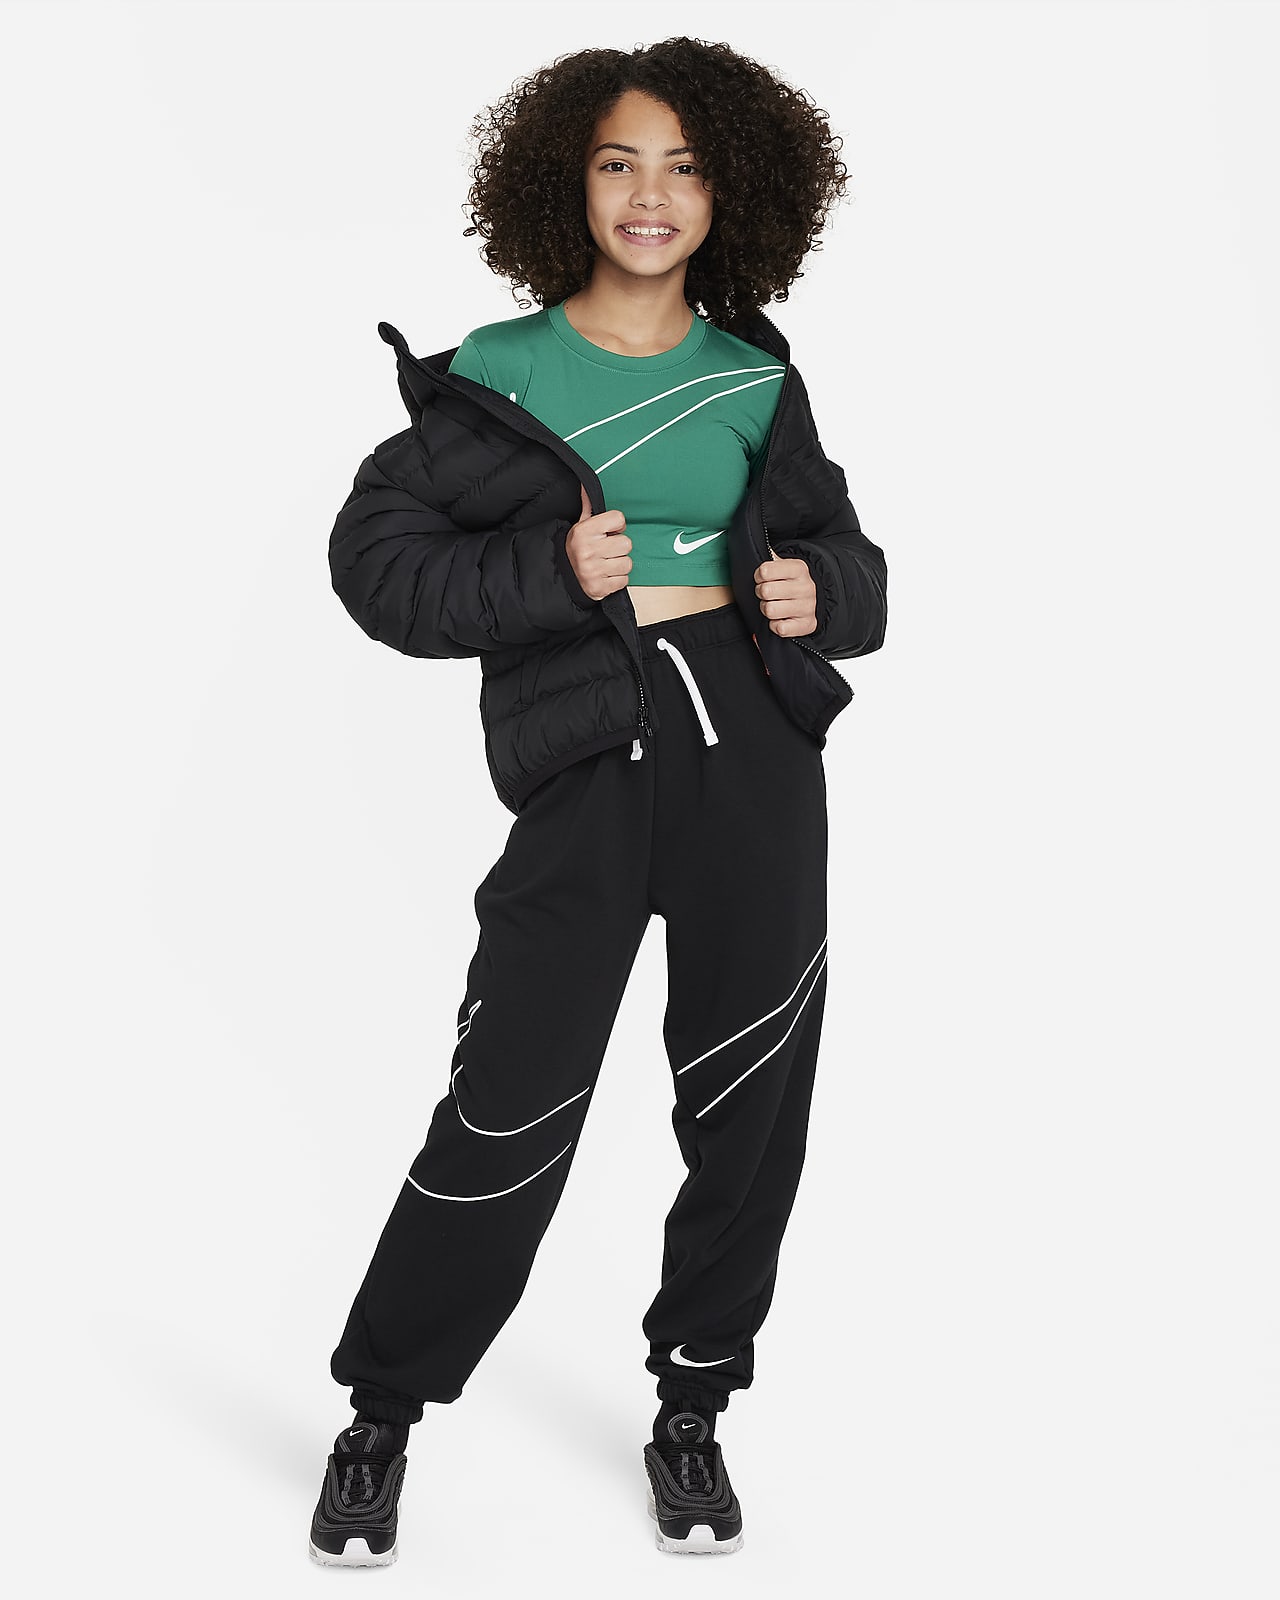 Medic maternal Intermediate Nike Sportswear Big Kids' (Girls') Long-Sleeve Crop Top. Nike.com